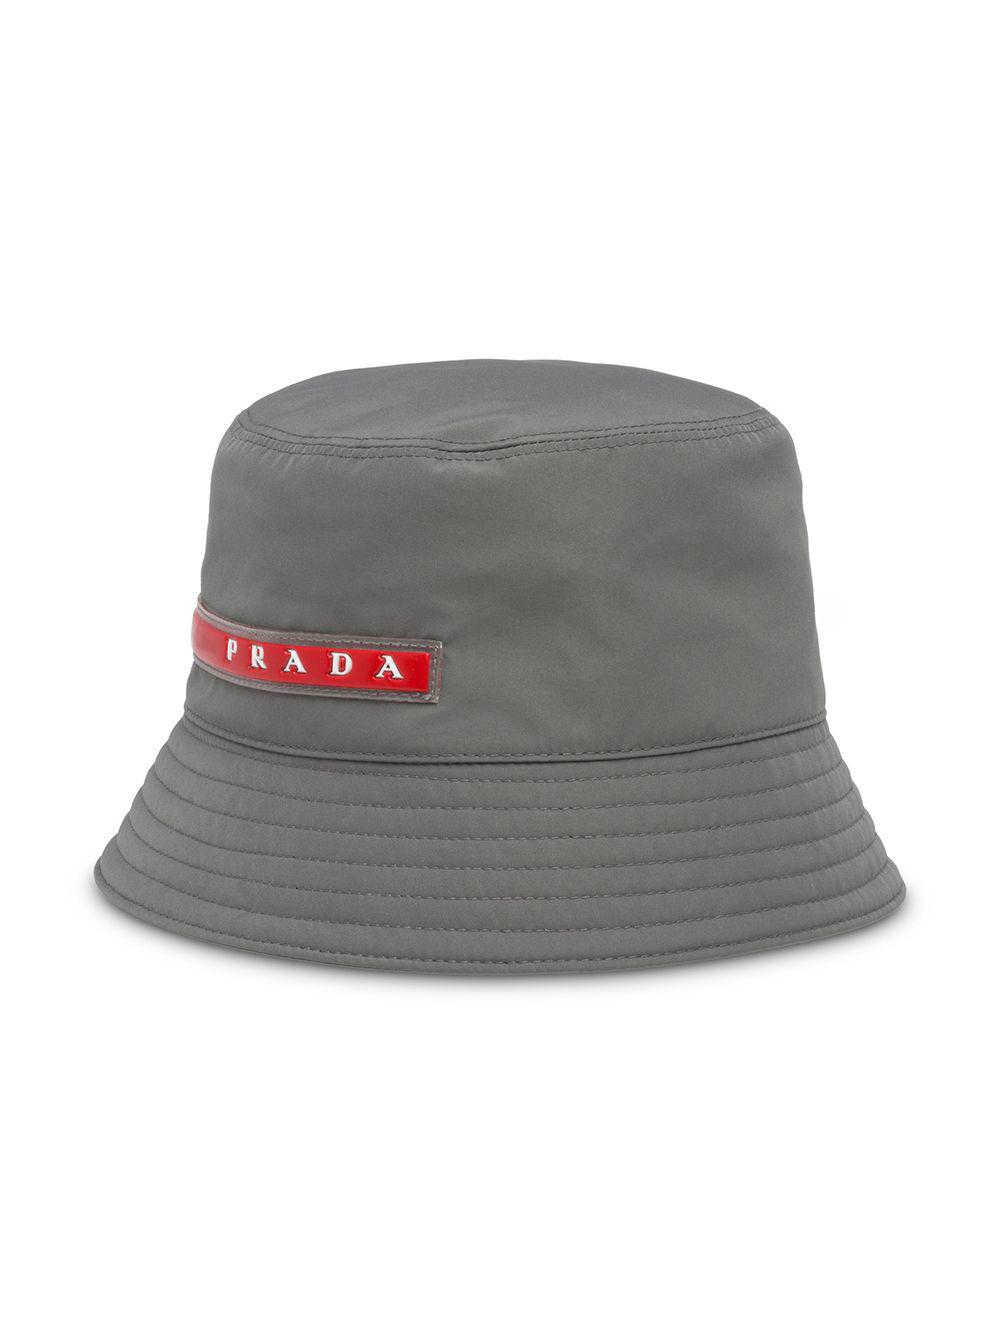 prada technical hat